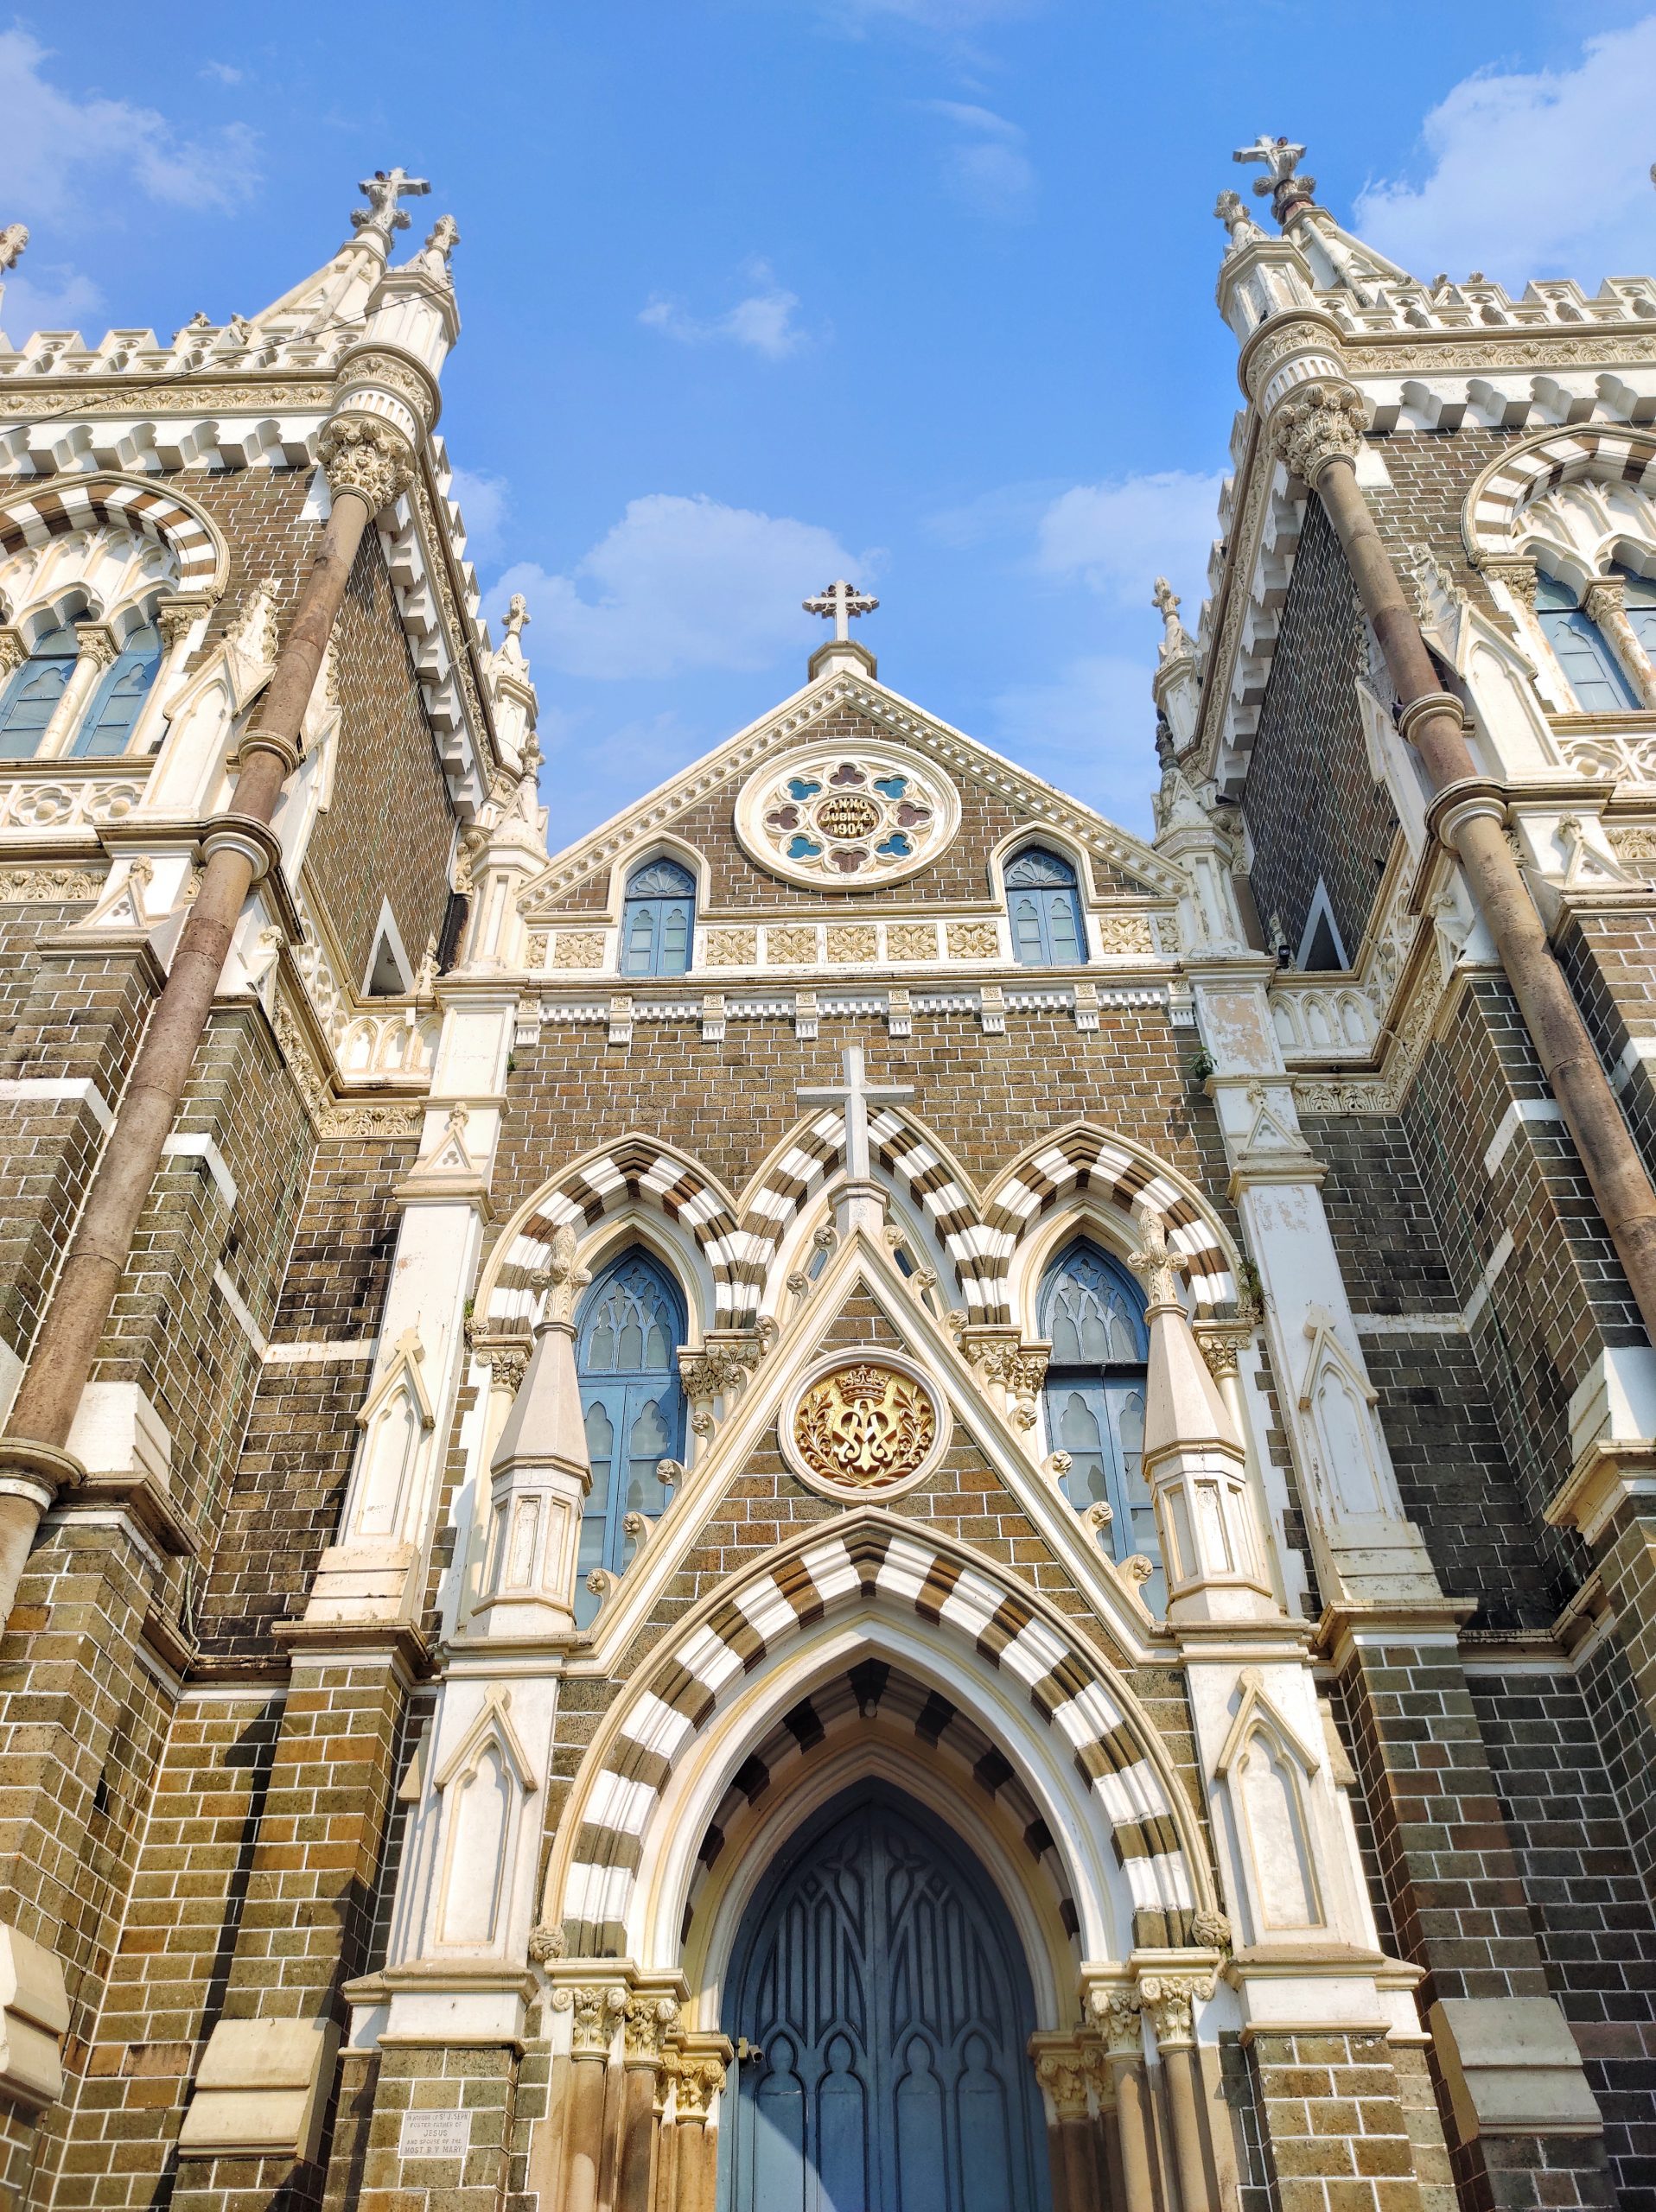 Mount Mary church in Mumbai